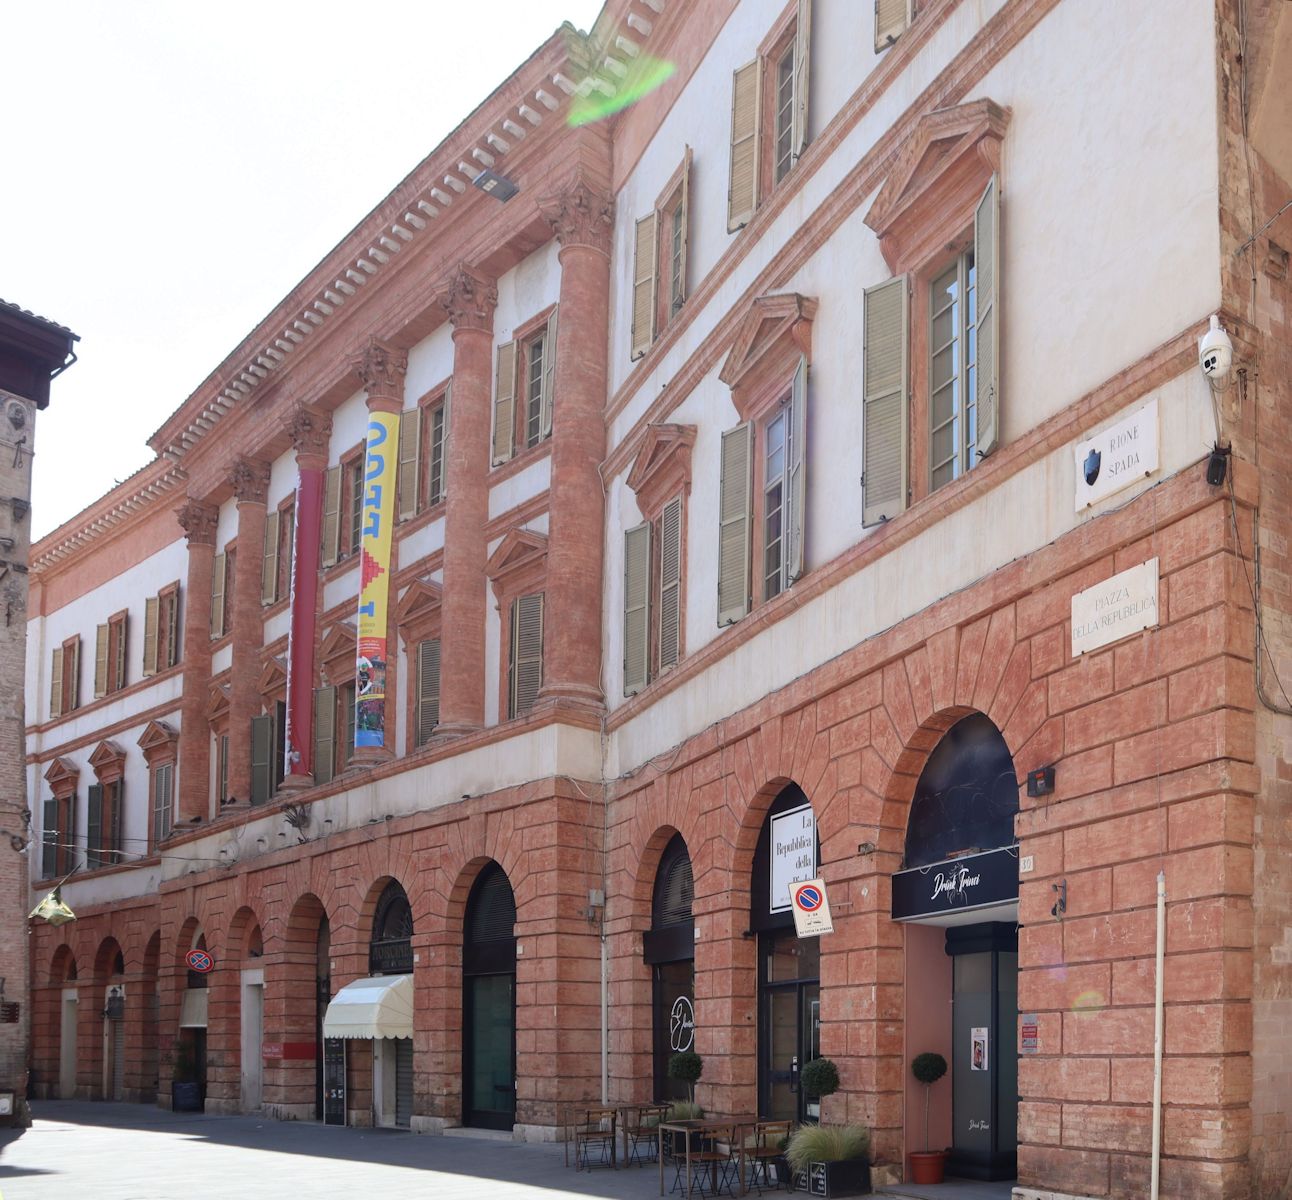 Palazzo Trinci in Foligno, heute Sitz des Kunstmuseums